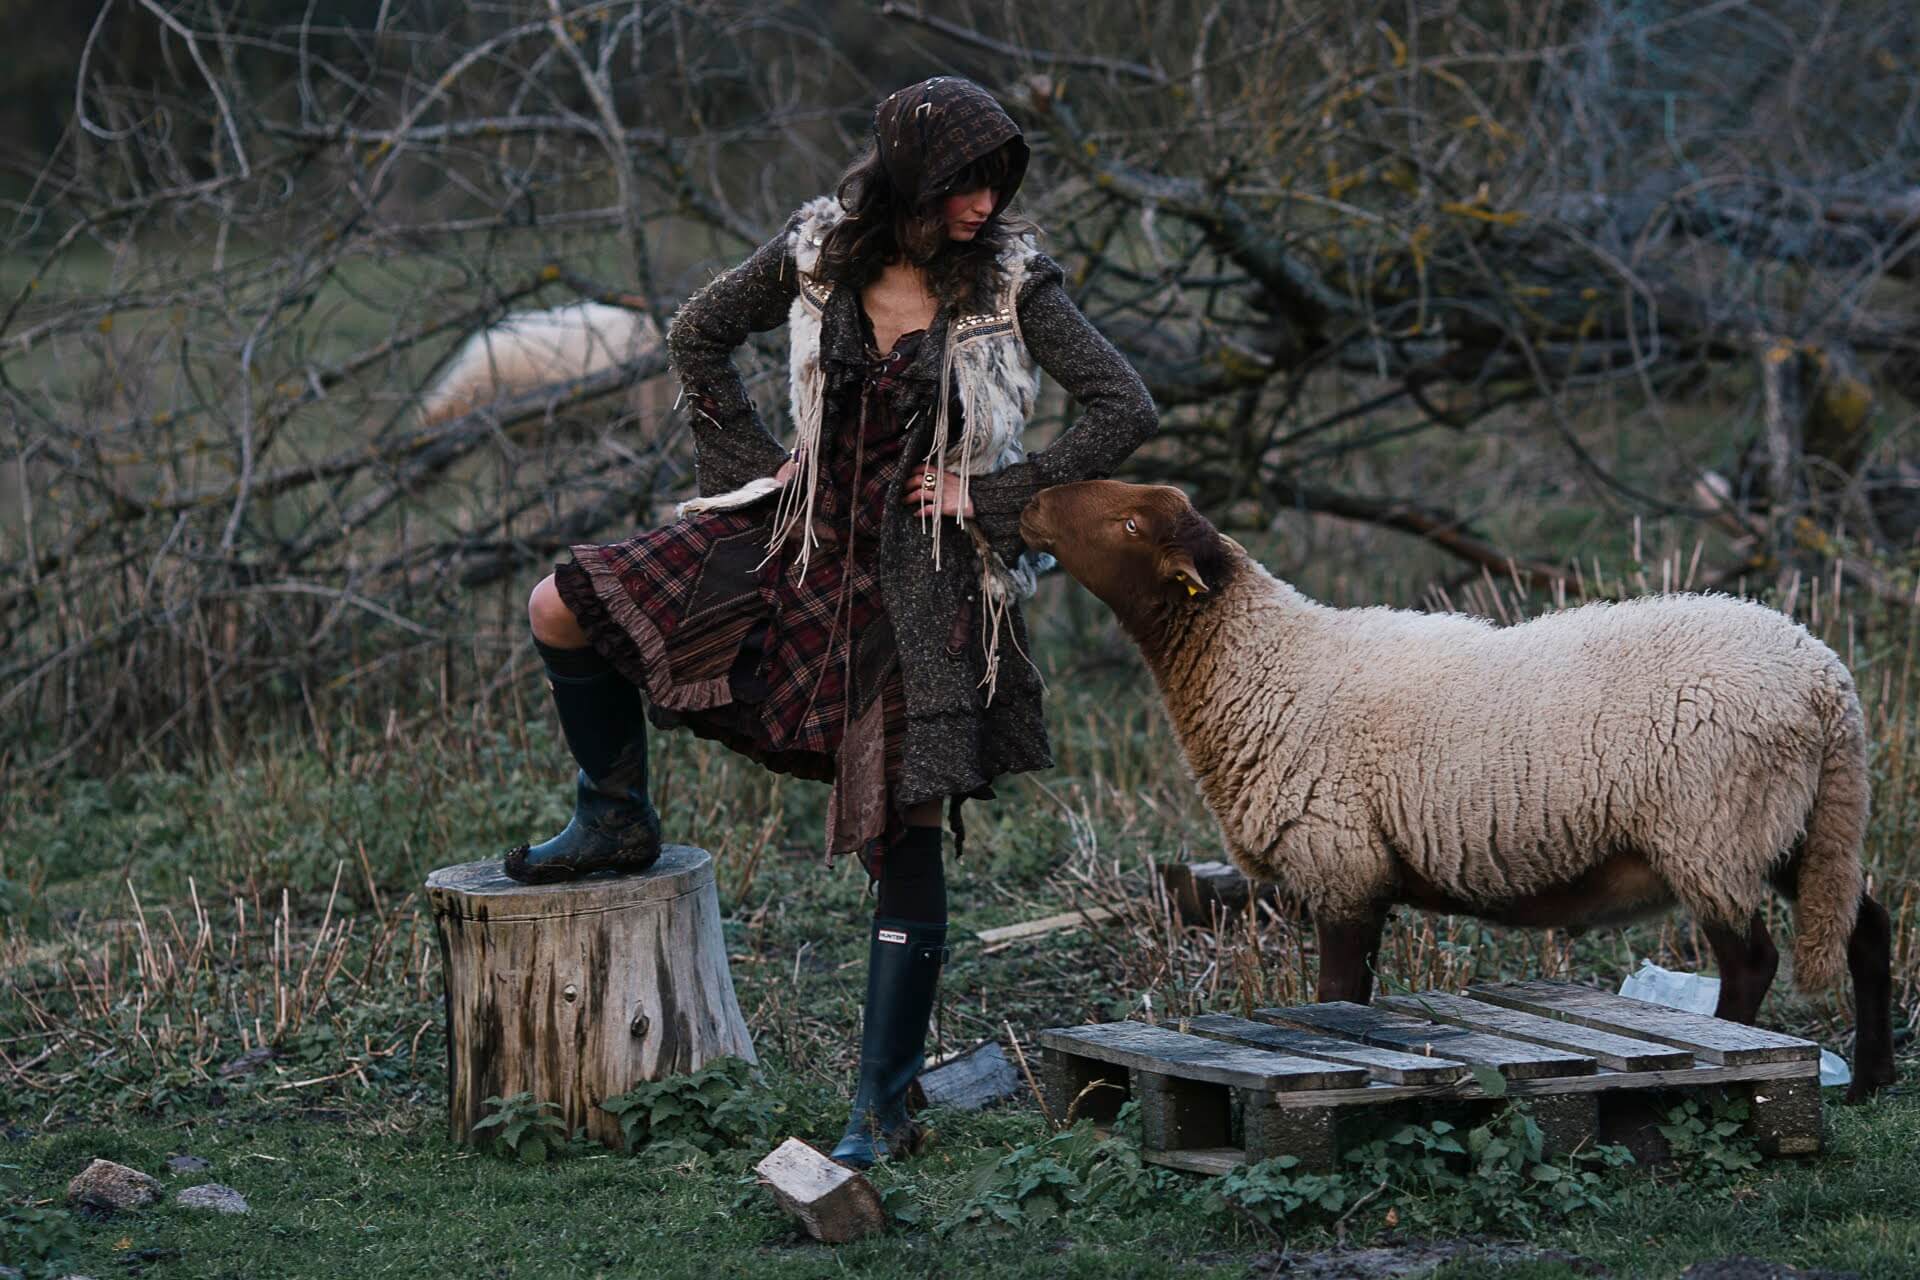 fashion-nomad-taciturn-obisidian-farm-girl